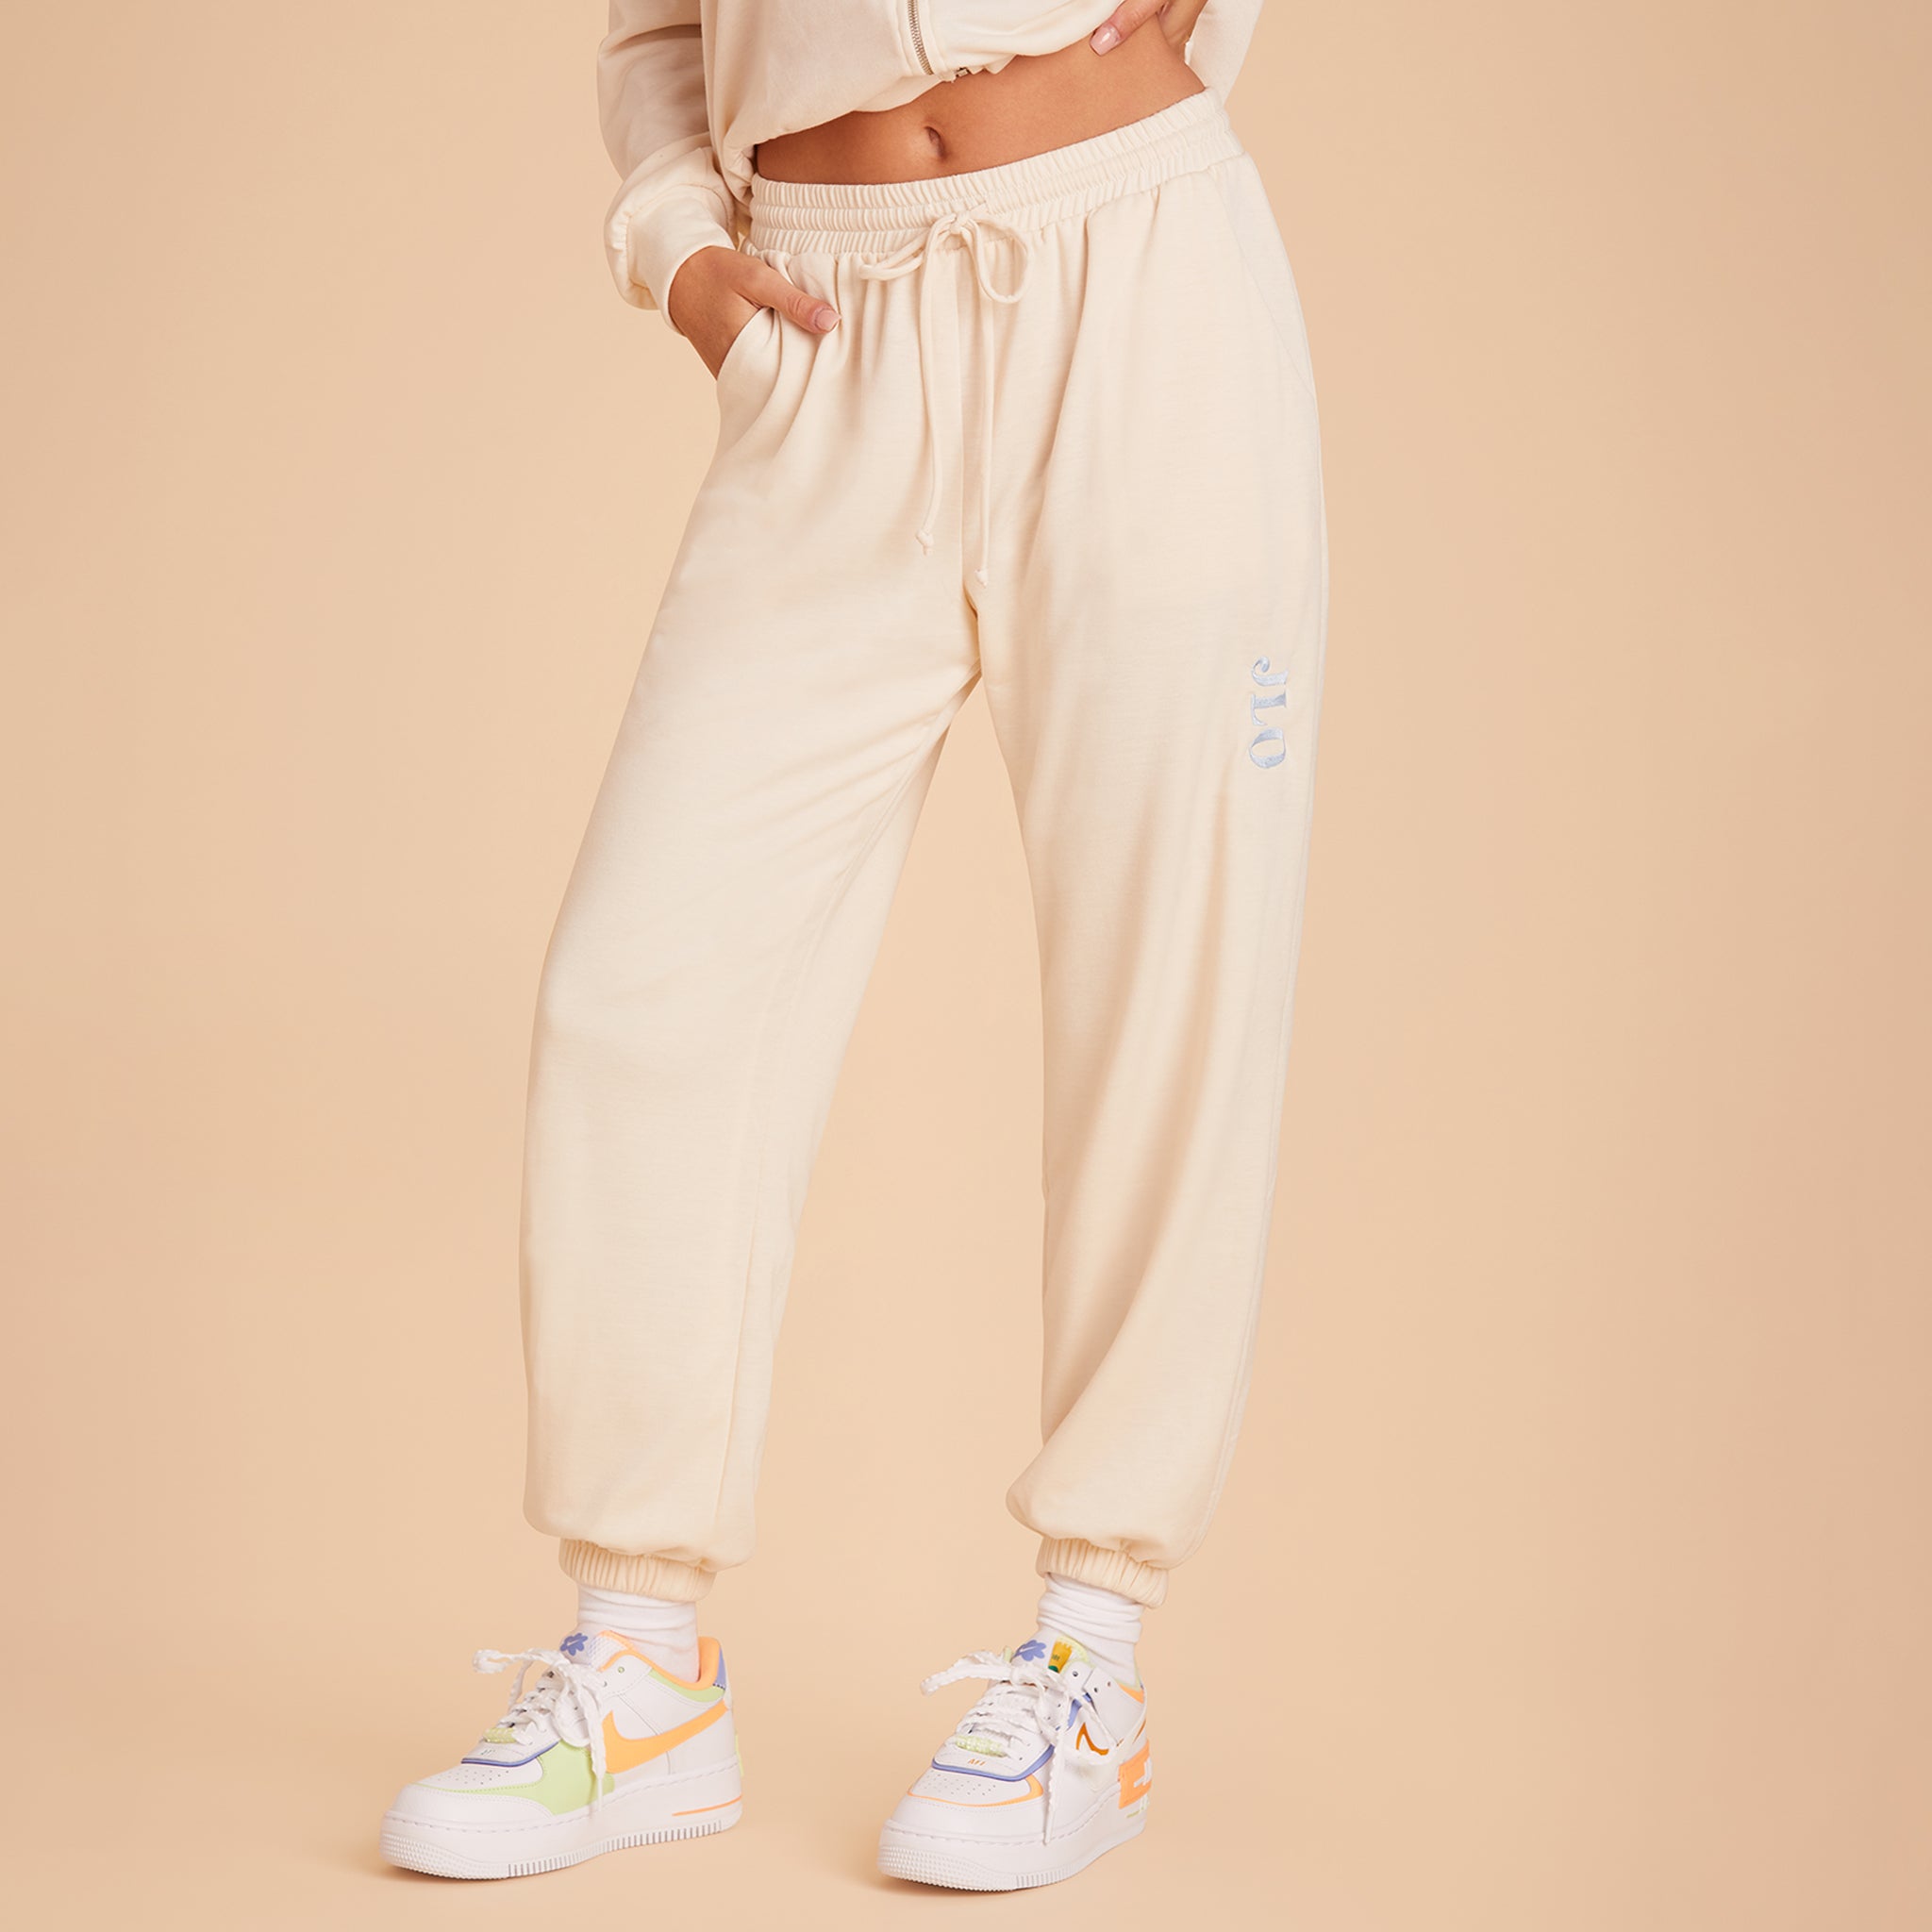 Gilli Personalized Sweatpants